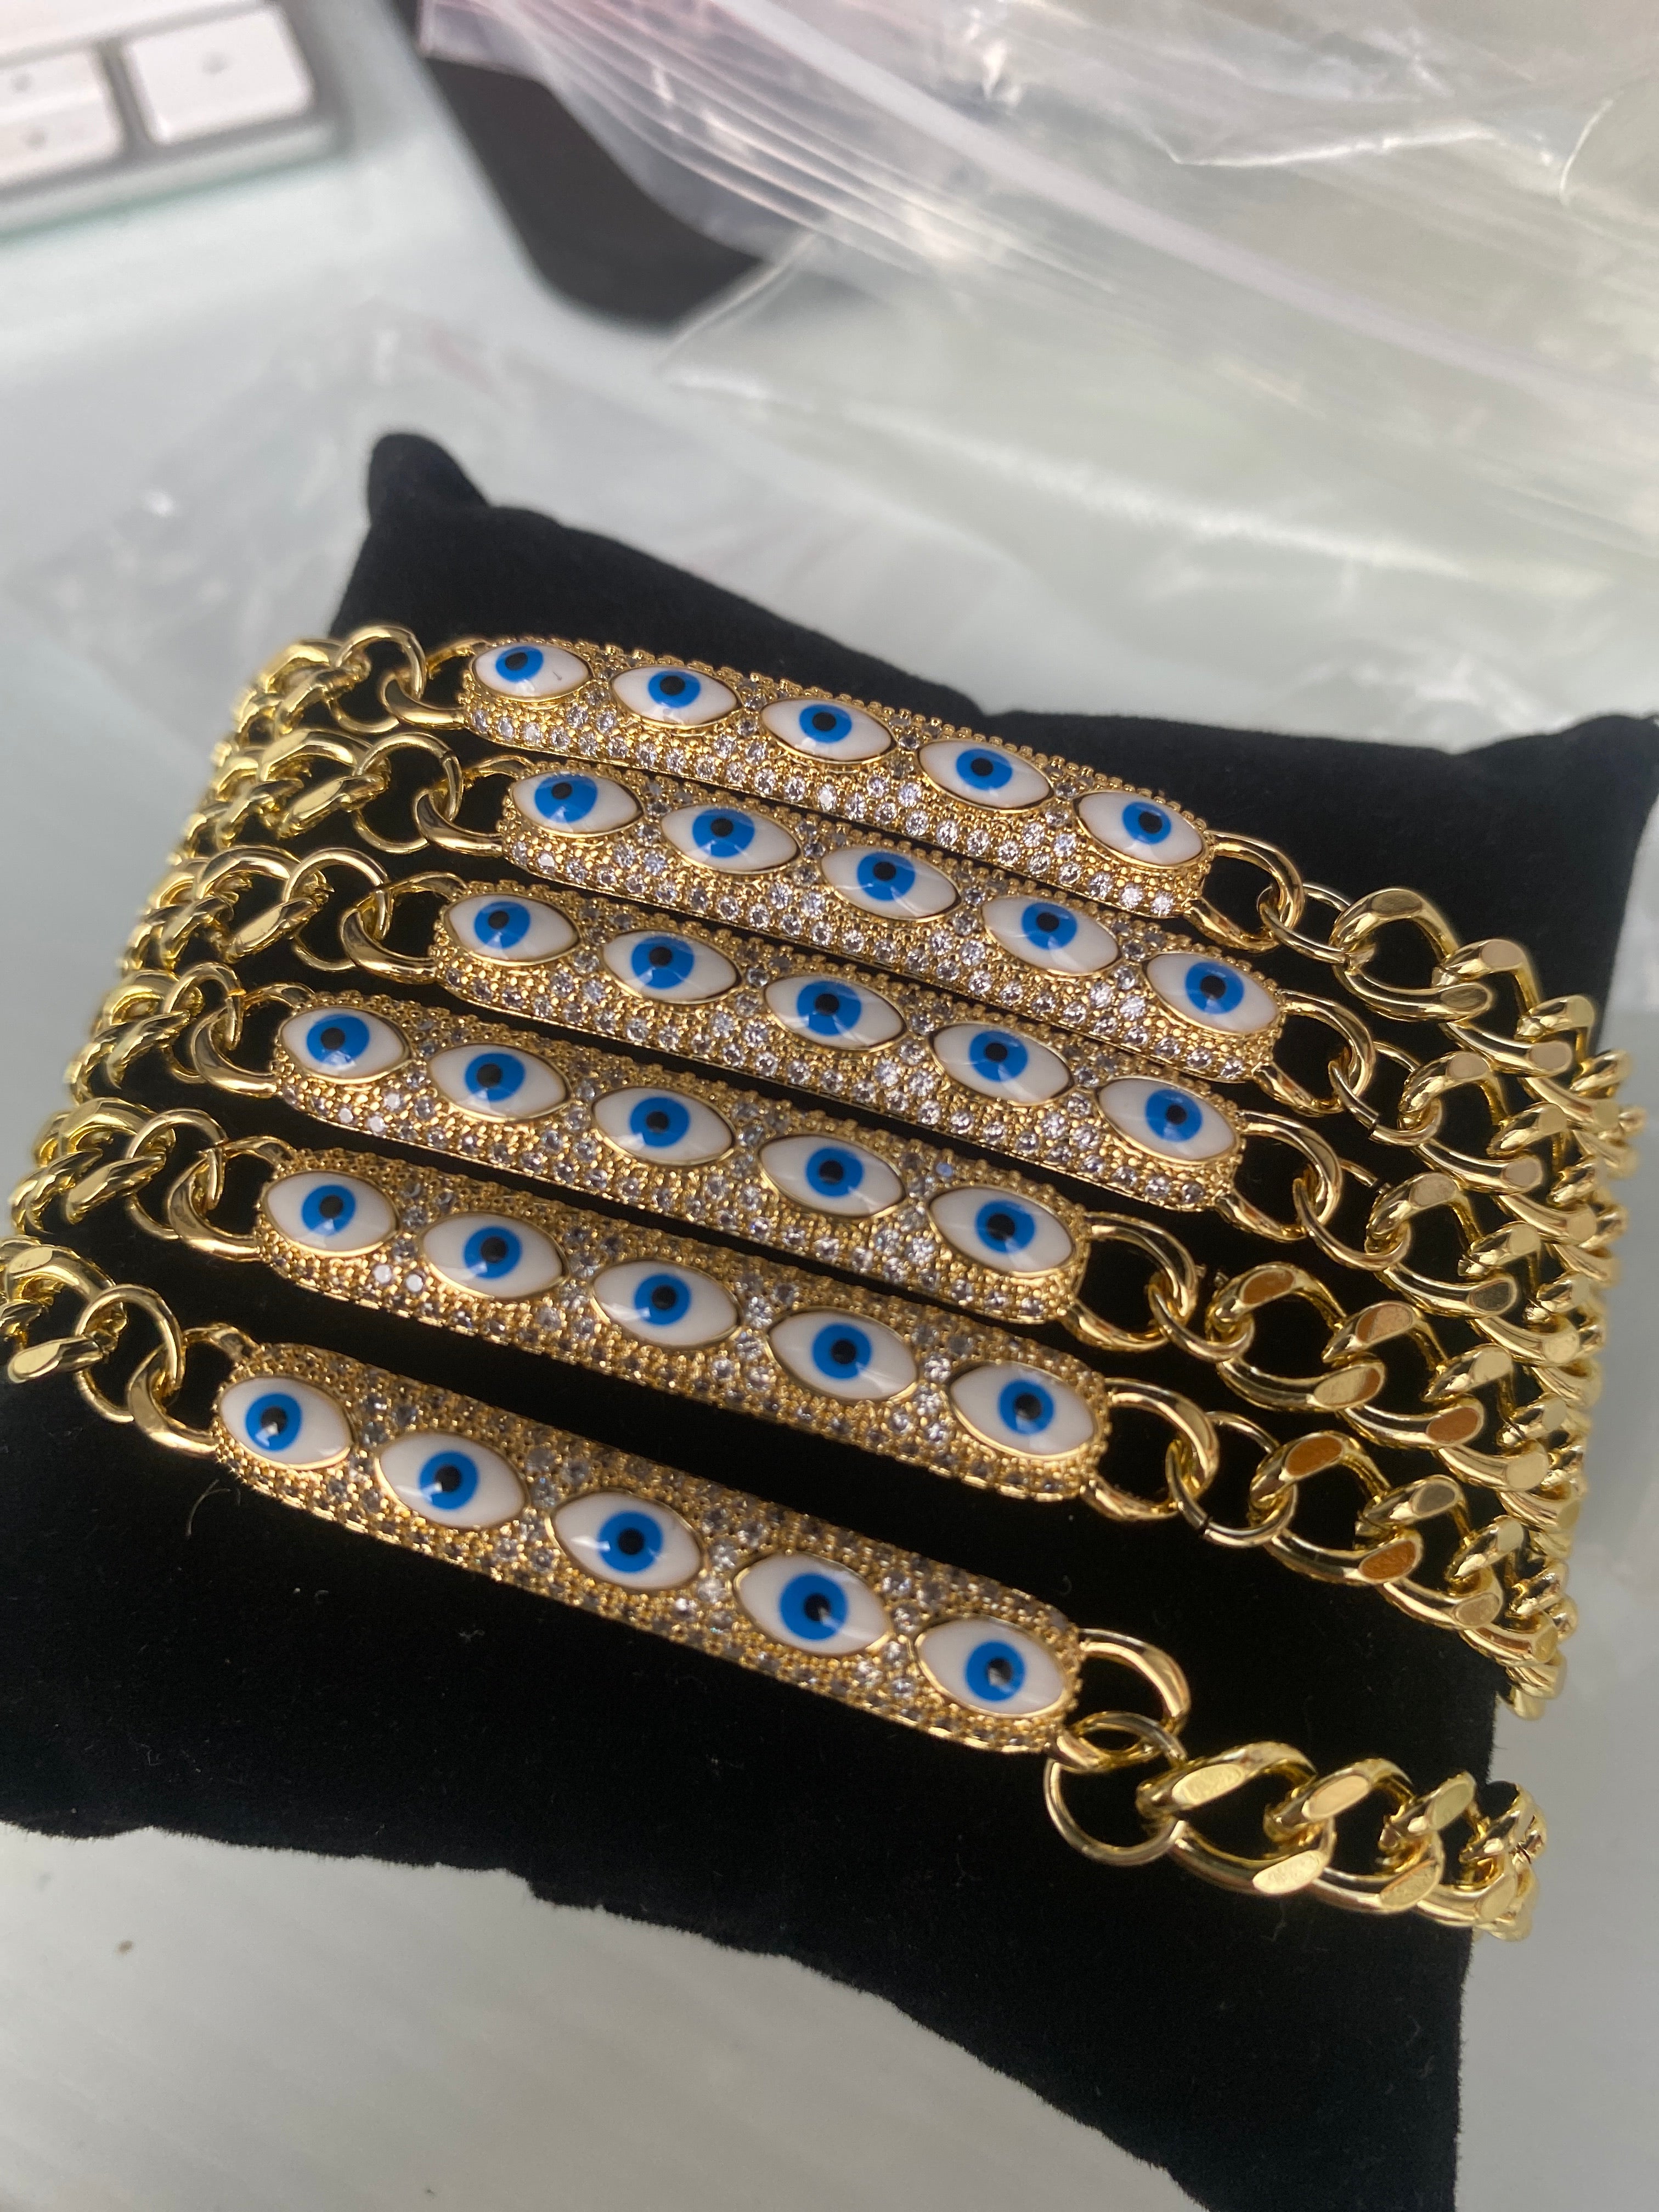 Karma and luck cuban chain bracelet gold plated rectangular evil eye